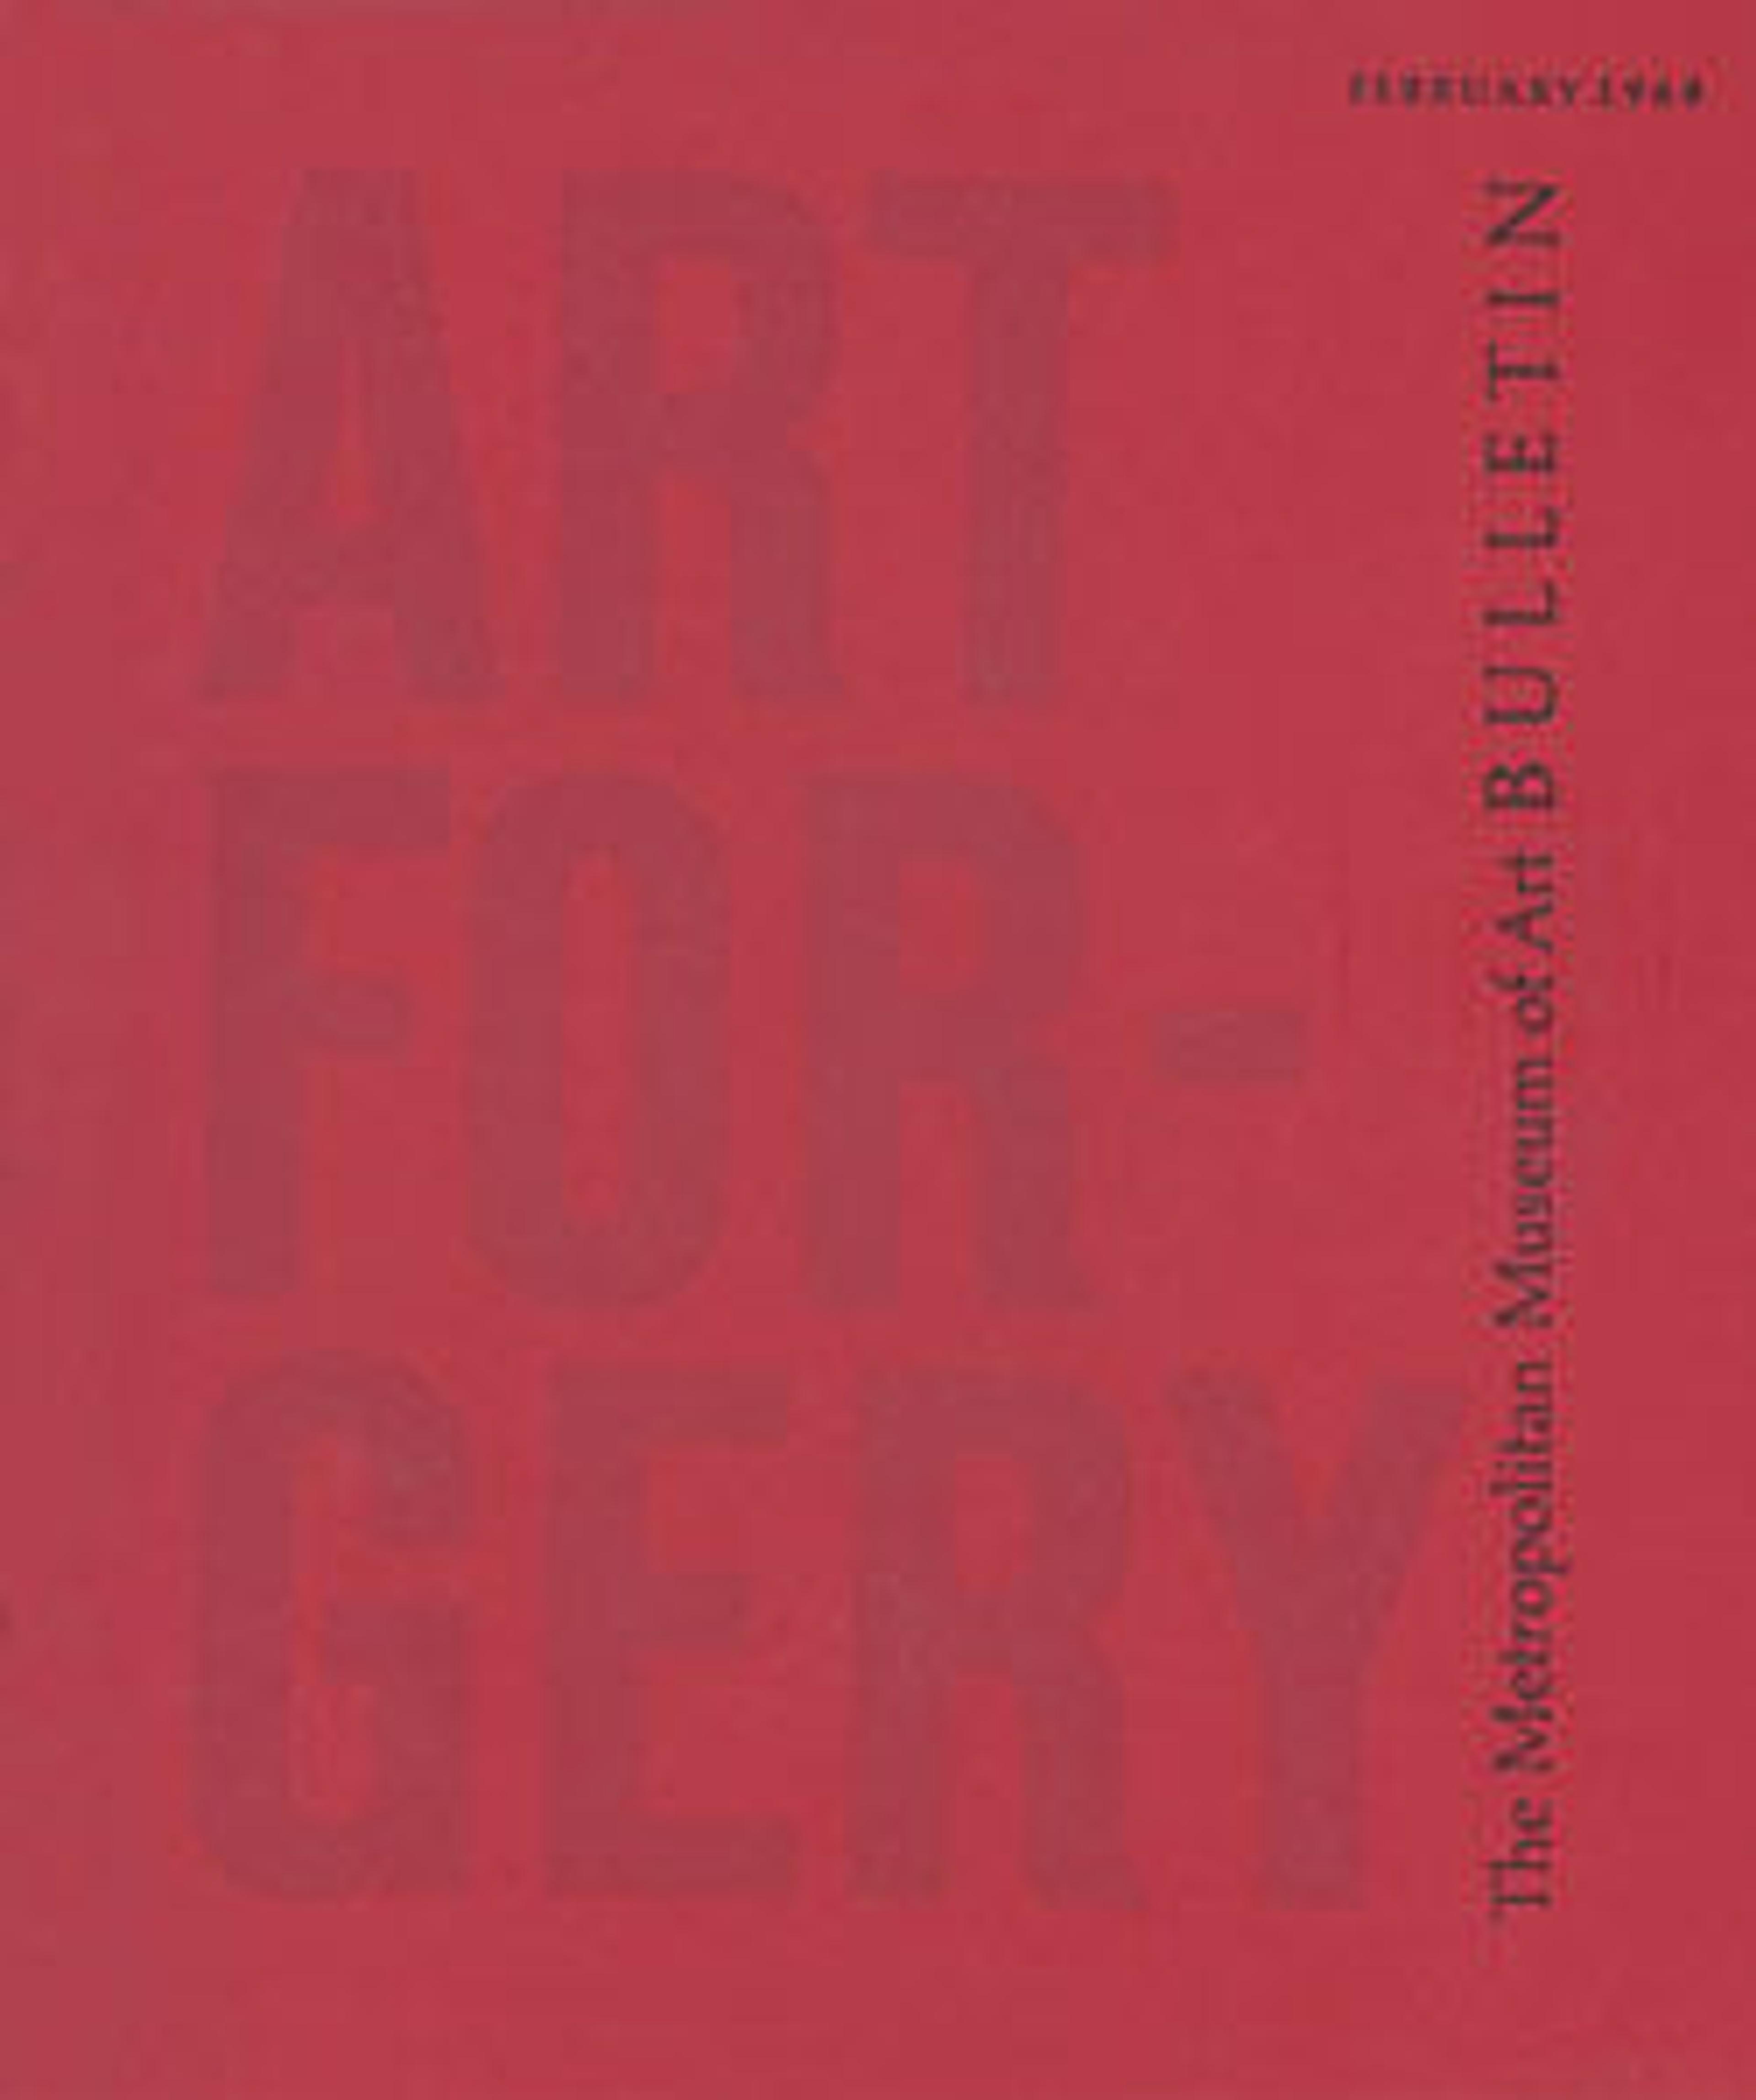 "Art Forgery": The Metropolitan Museum of Art Bulletin, v. 26, no. 6 (February, 1968)